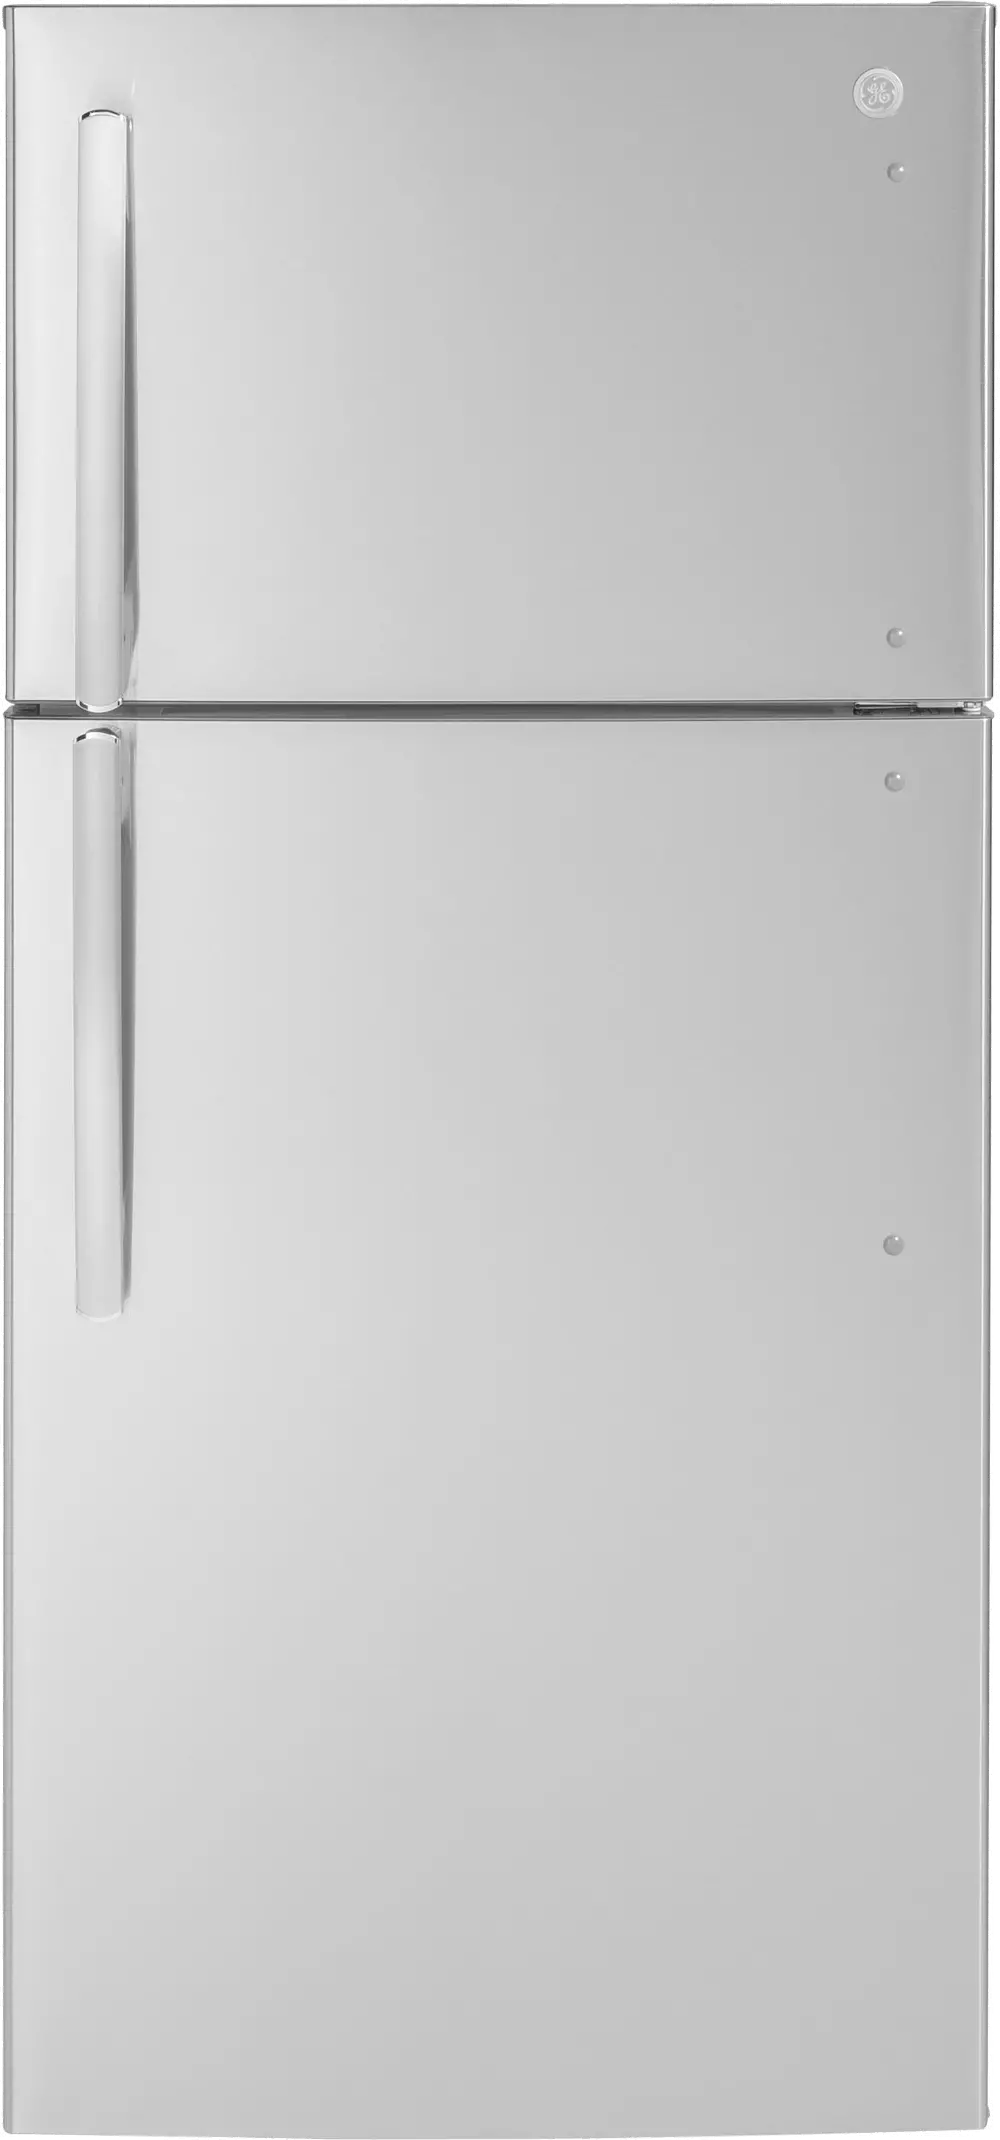 GTE18MSRRSS GE 18 cu ft Top Freezer Refrigerator - 30 W Stainless Steel-1